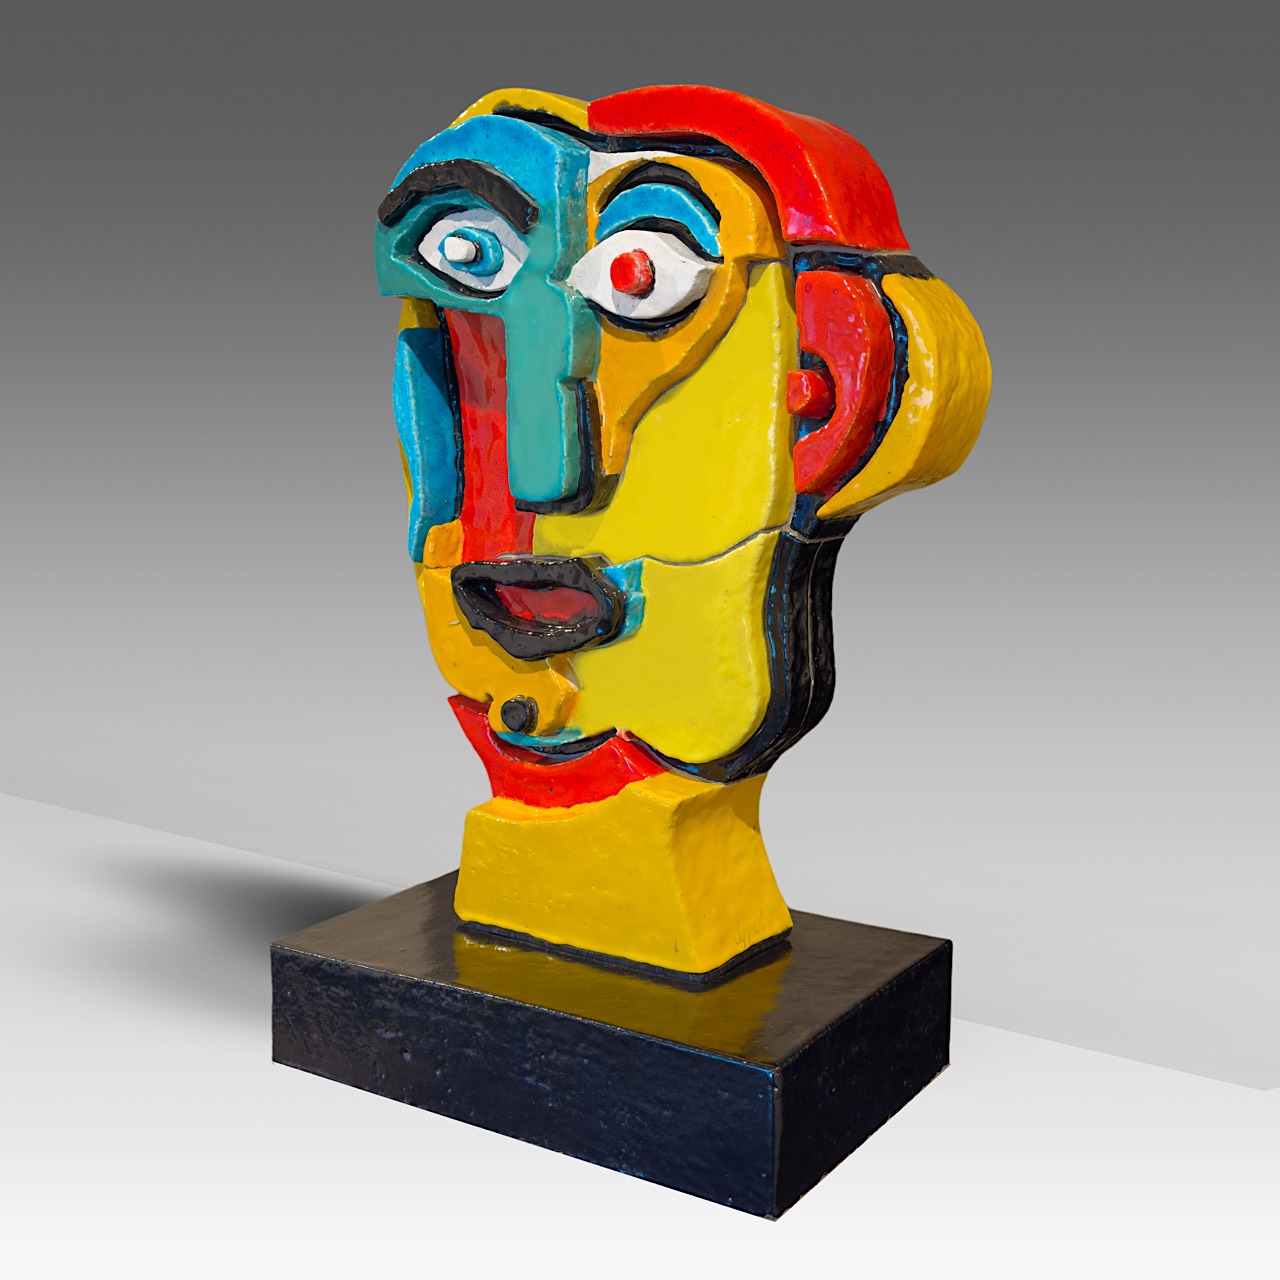 Karel Appel (1921-2006), head, 1975, glazed ceramic, H 81 cm - Image 2 of 5